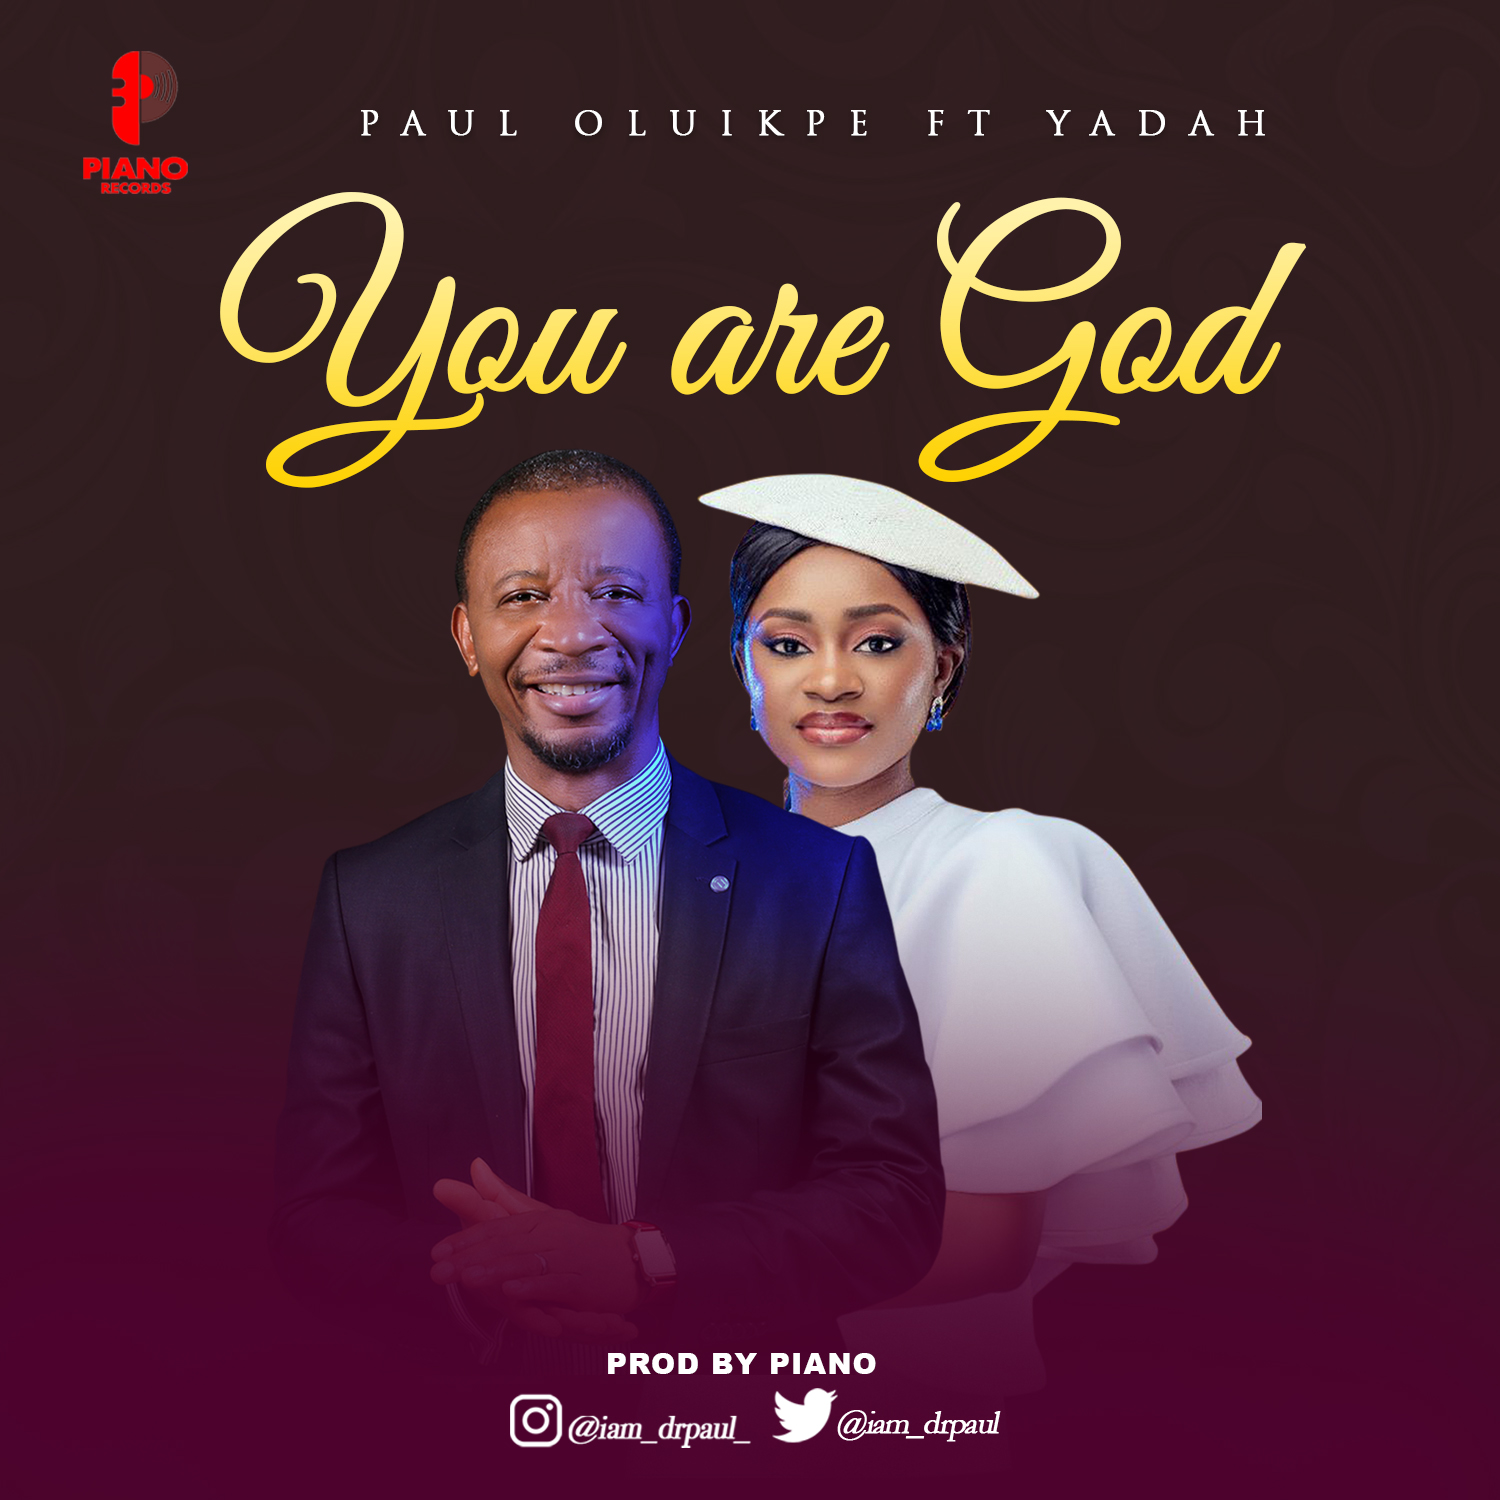 You Are God - Paul Oluikpe ft Yadah